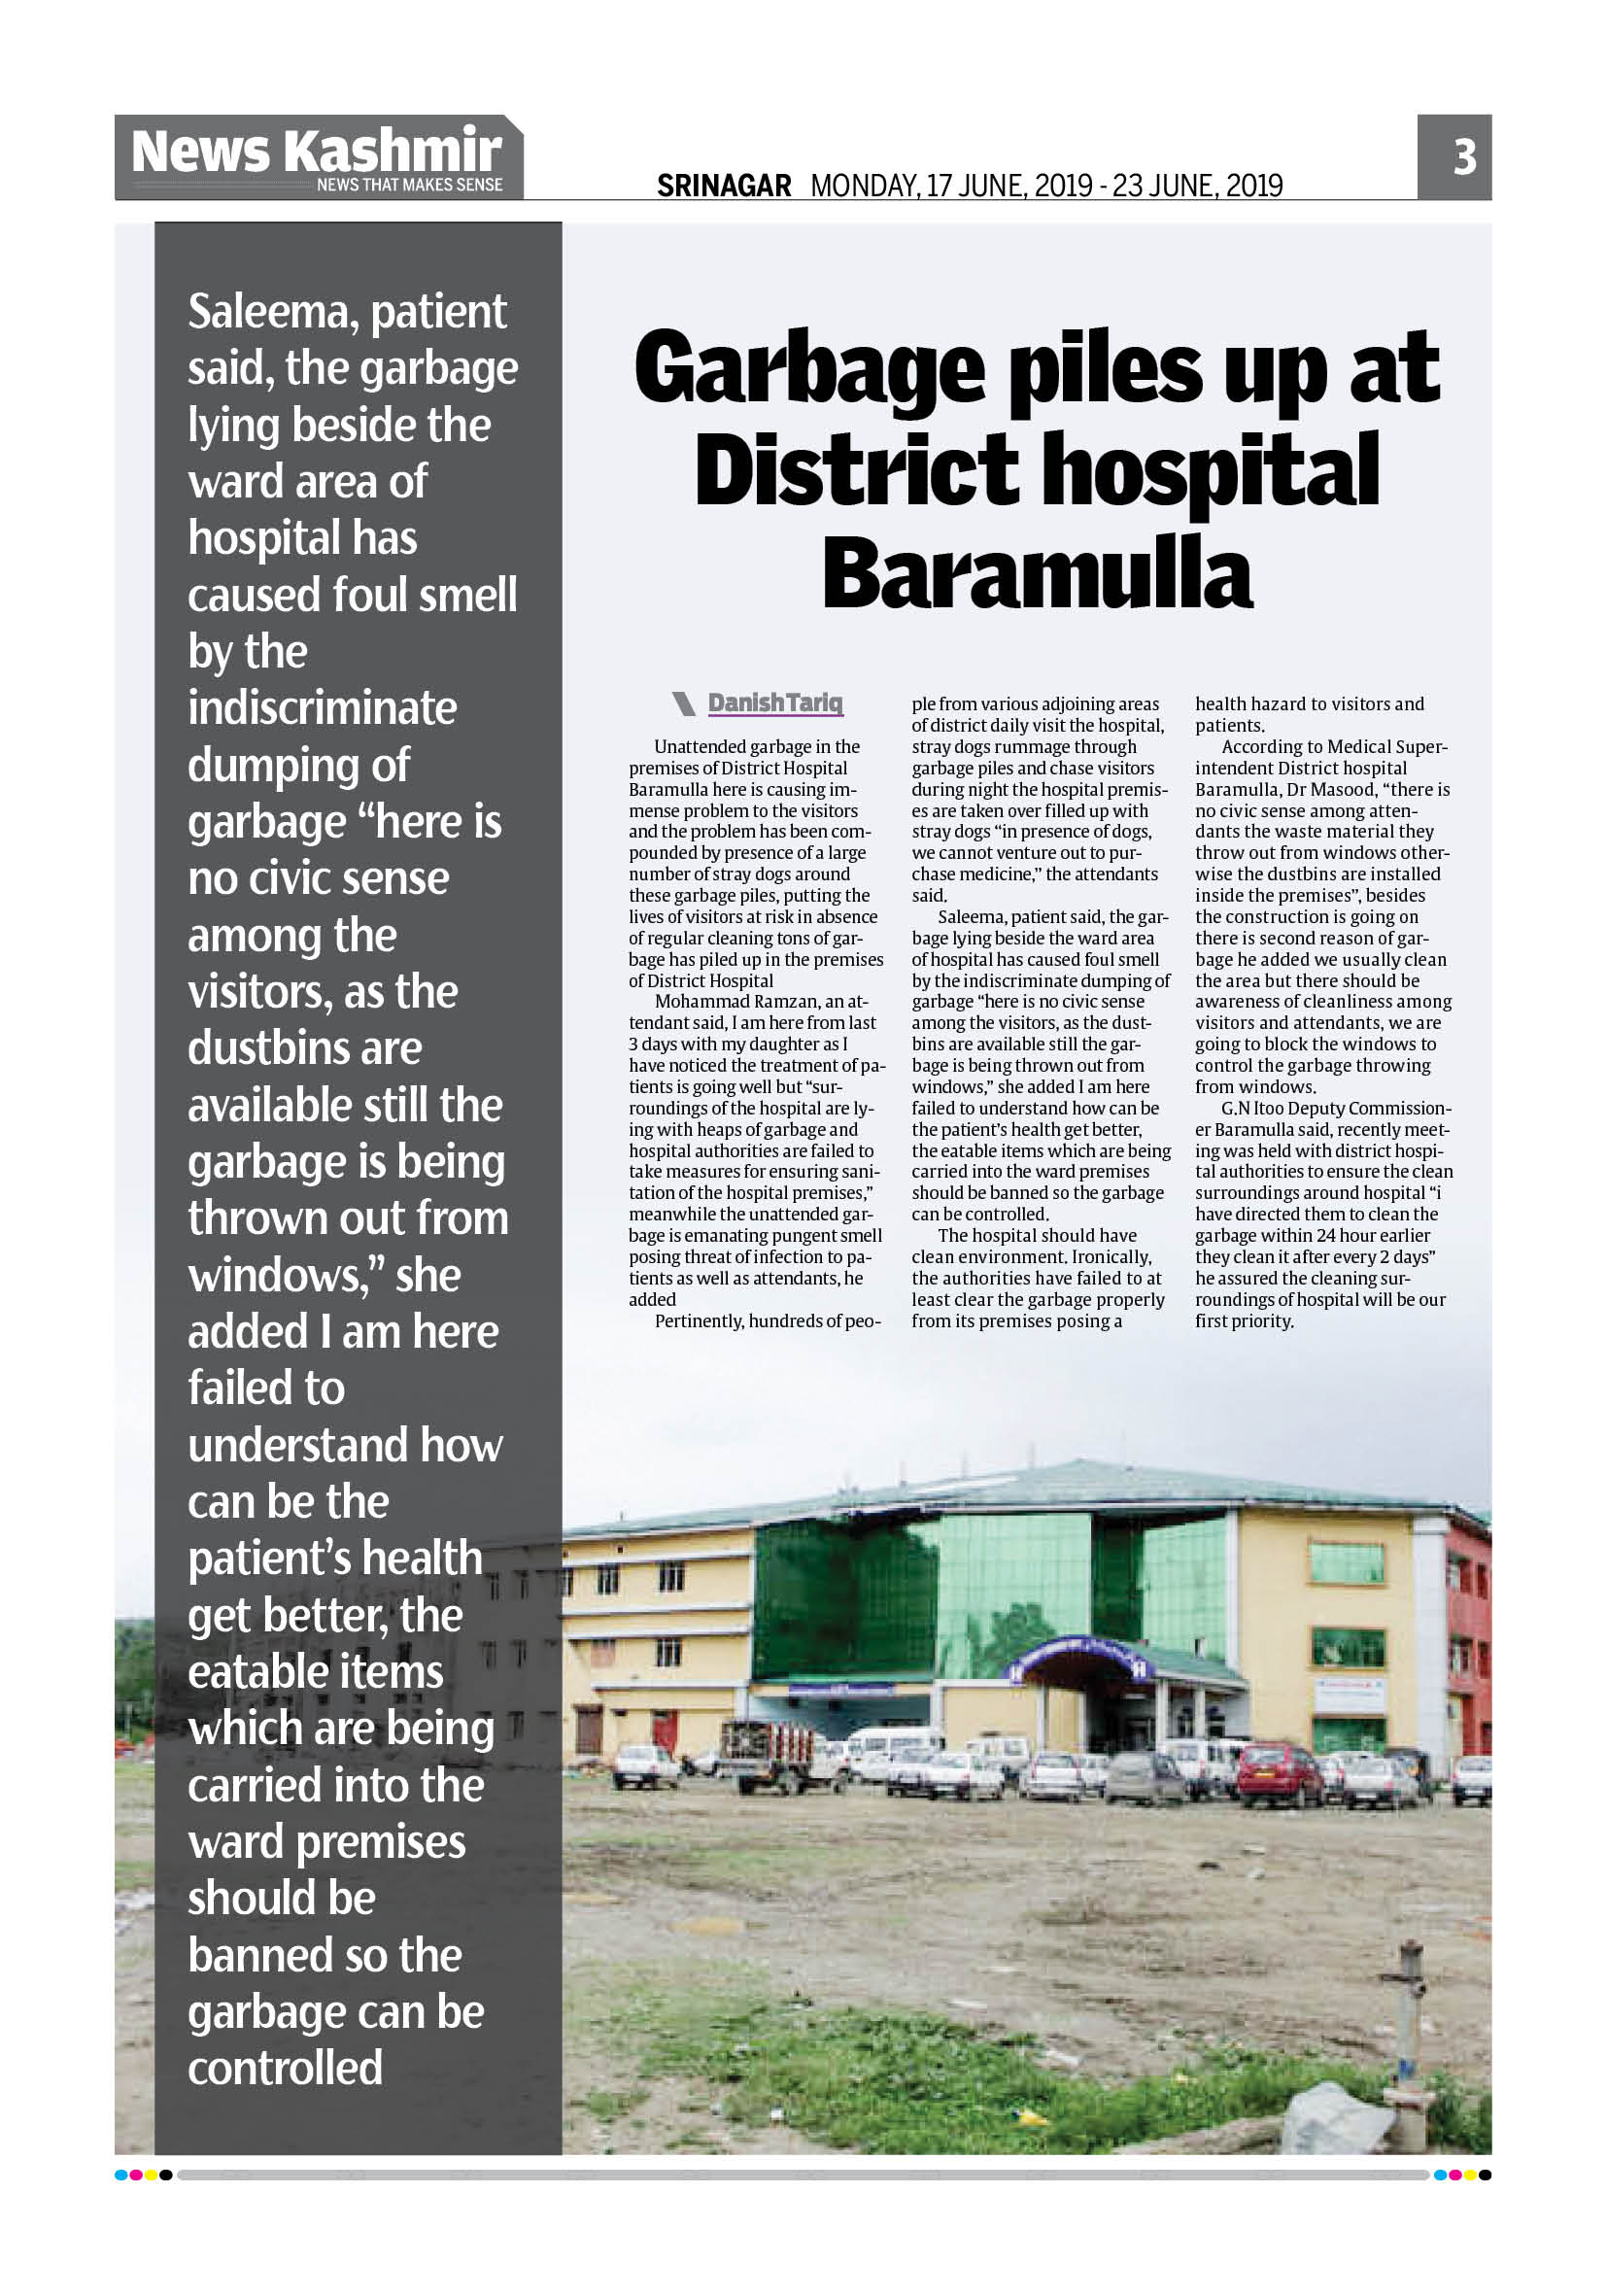 Garbage Piles up at District hospital Baramulla